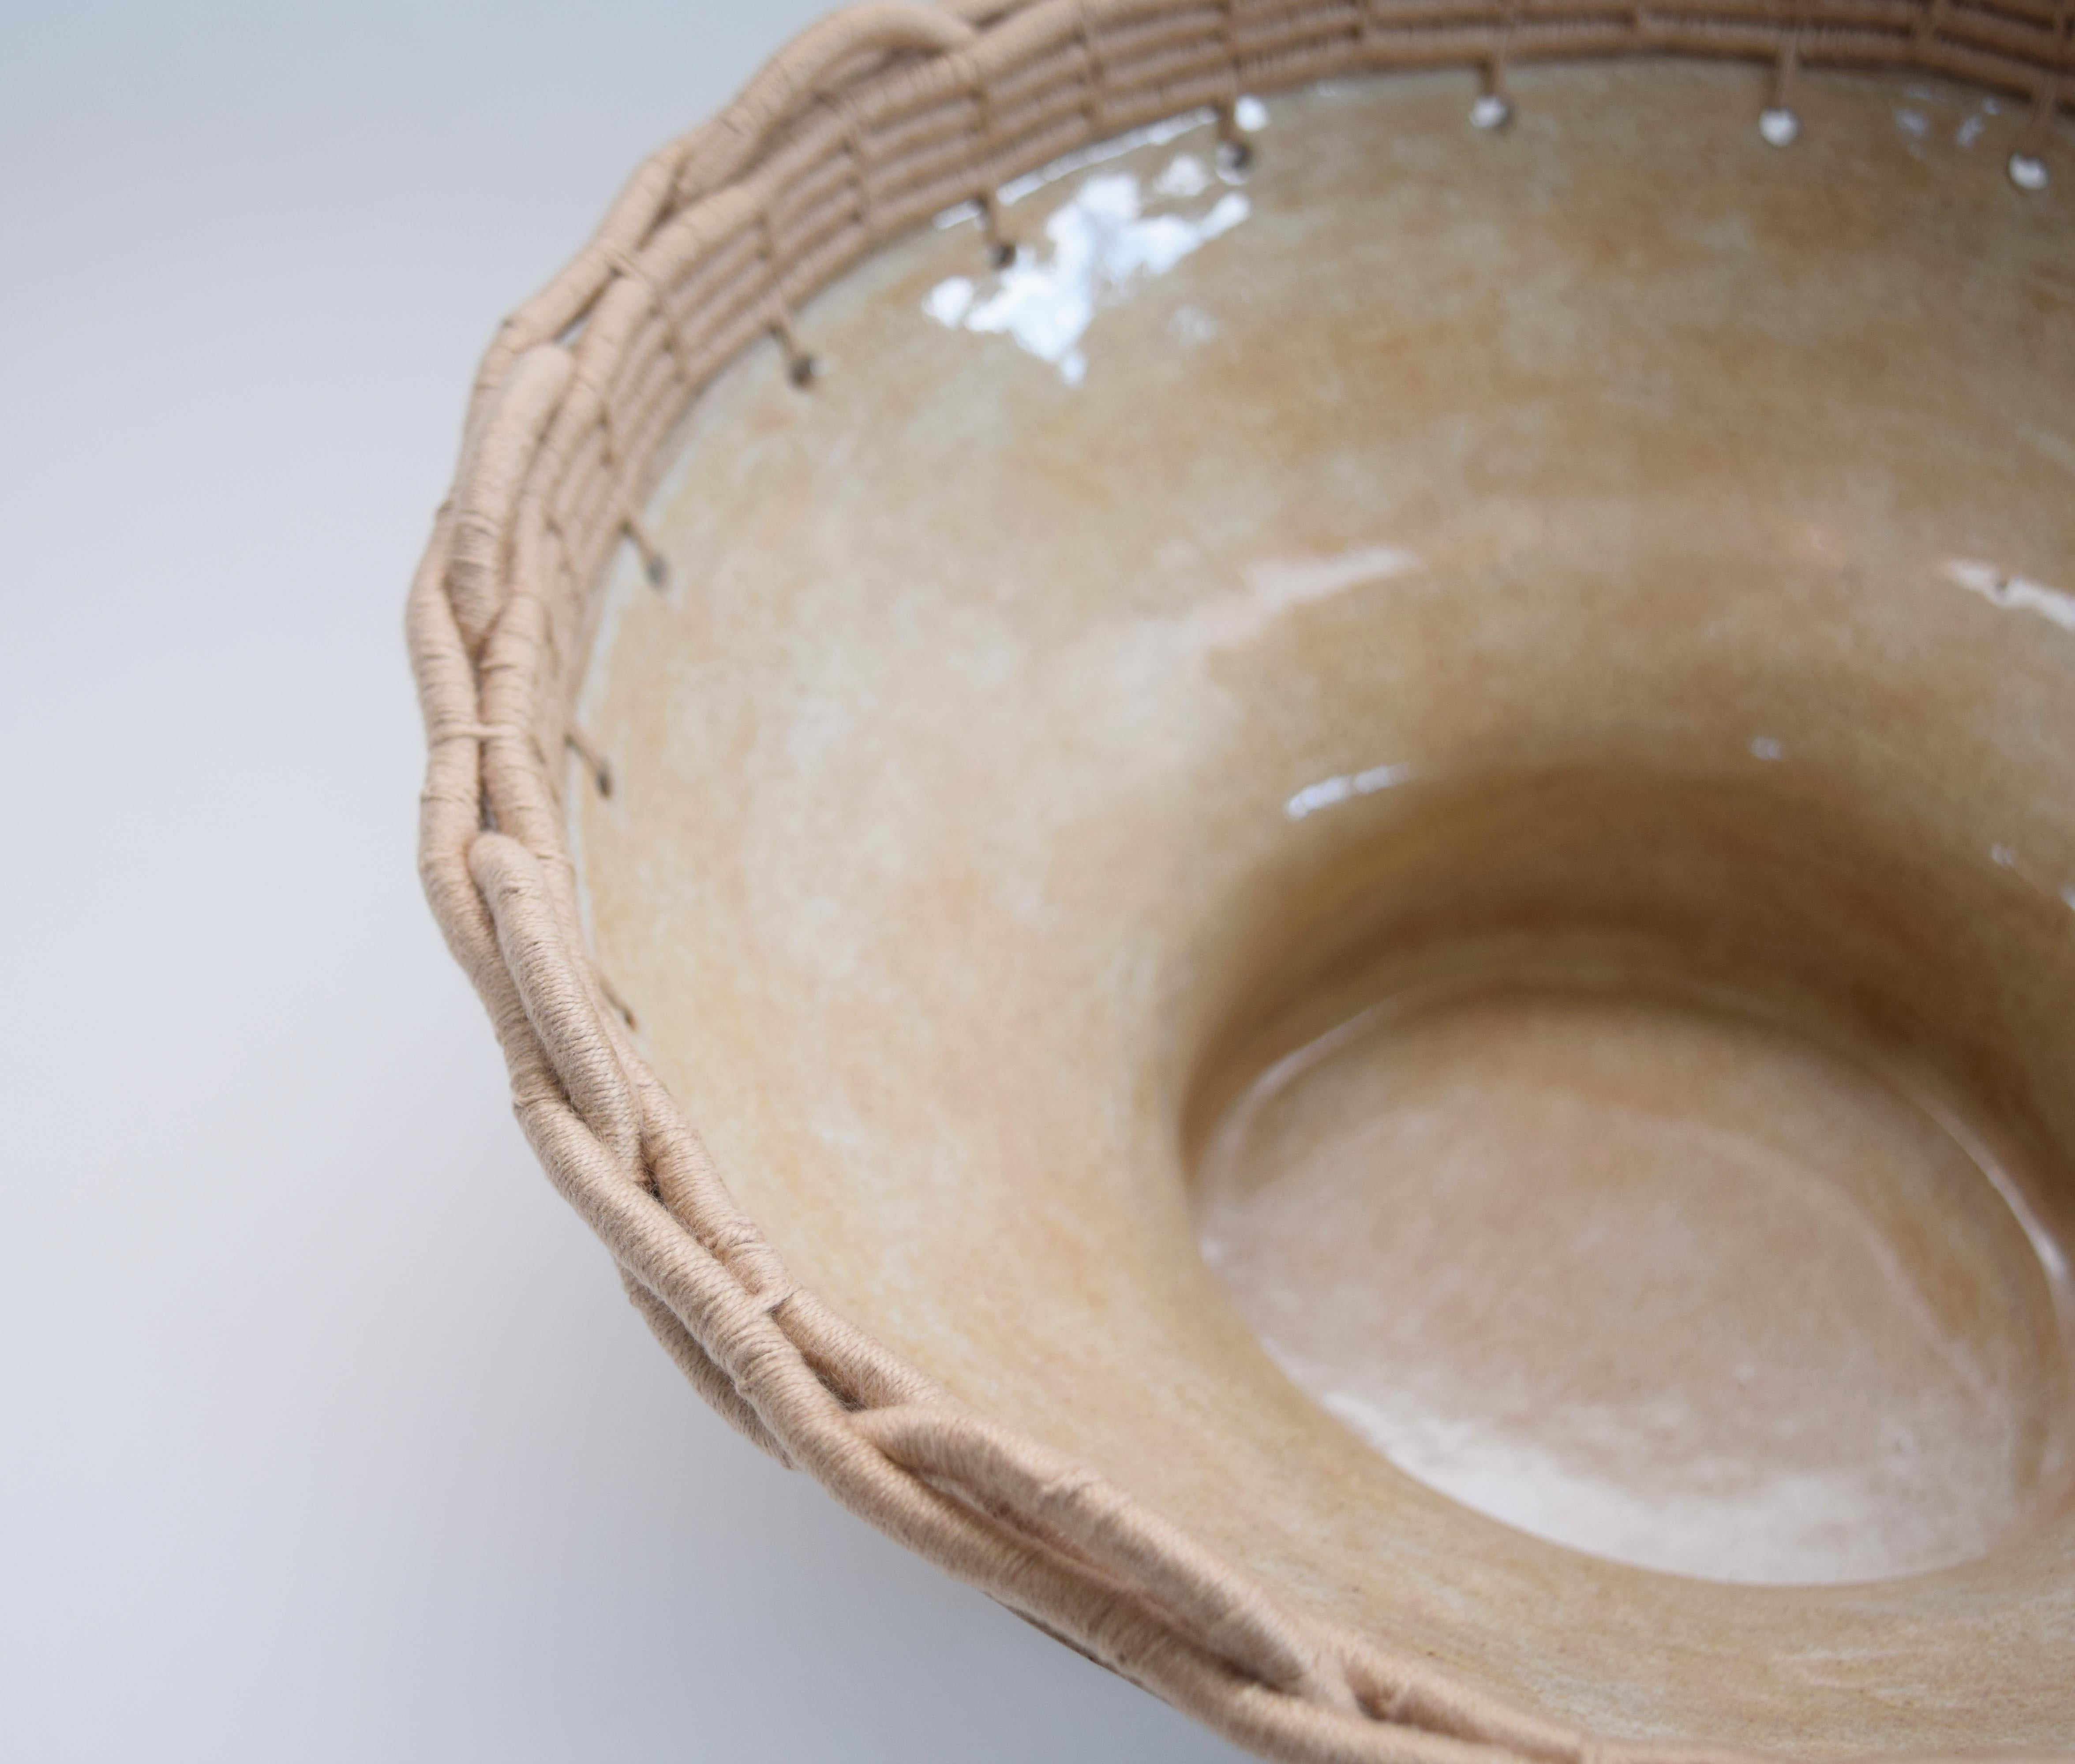 American One of a Kind Handmade Ceramic Bowl #792, Light Tan Glaze & Woven Cotton Upper